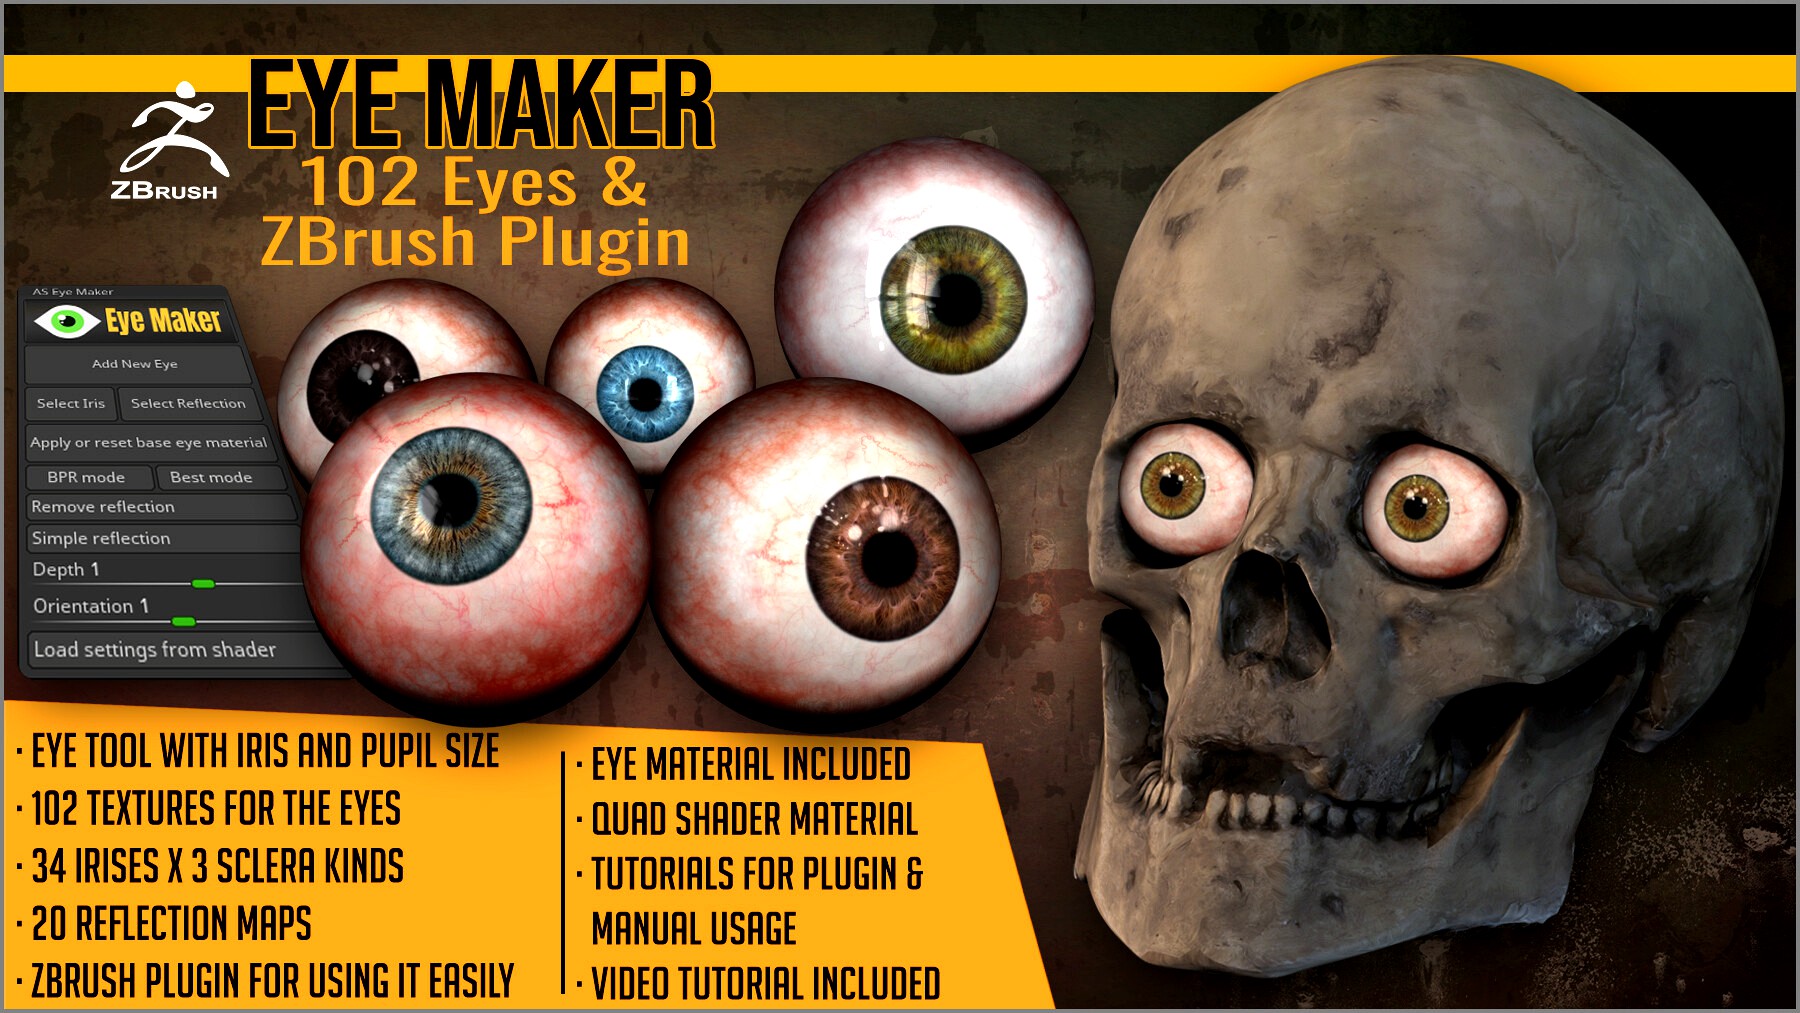 Eye Maker: 102 Eyes and ZBrush Plugin